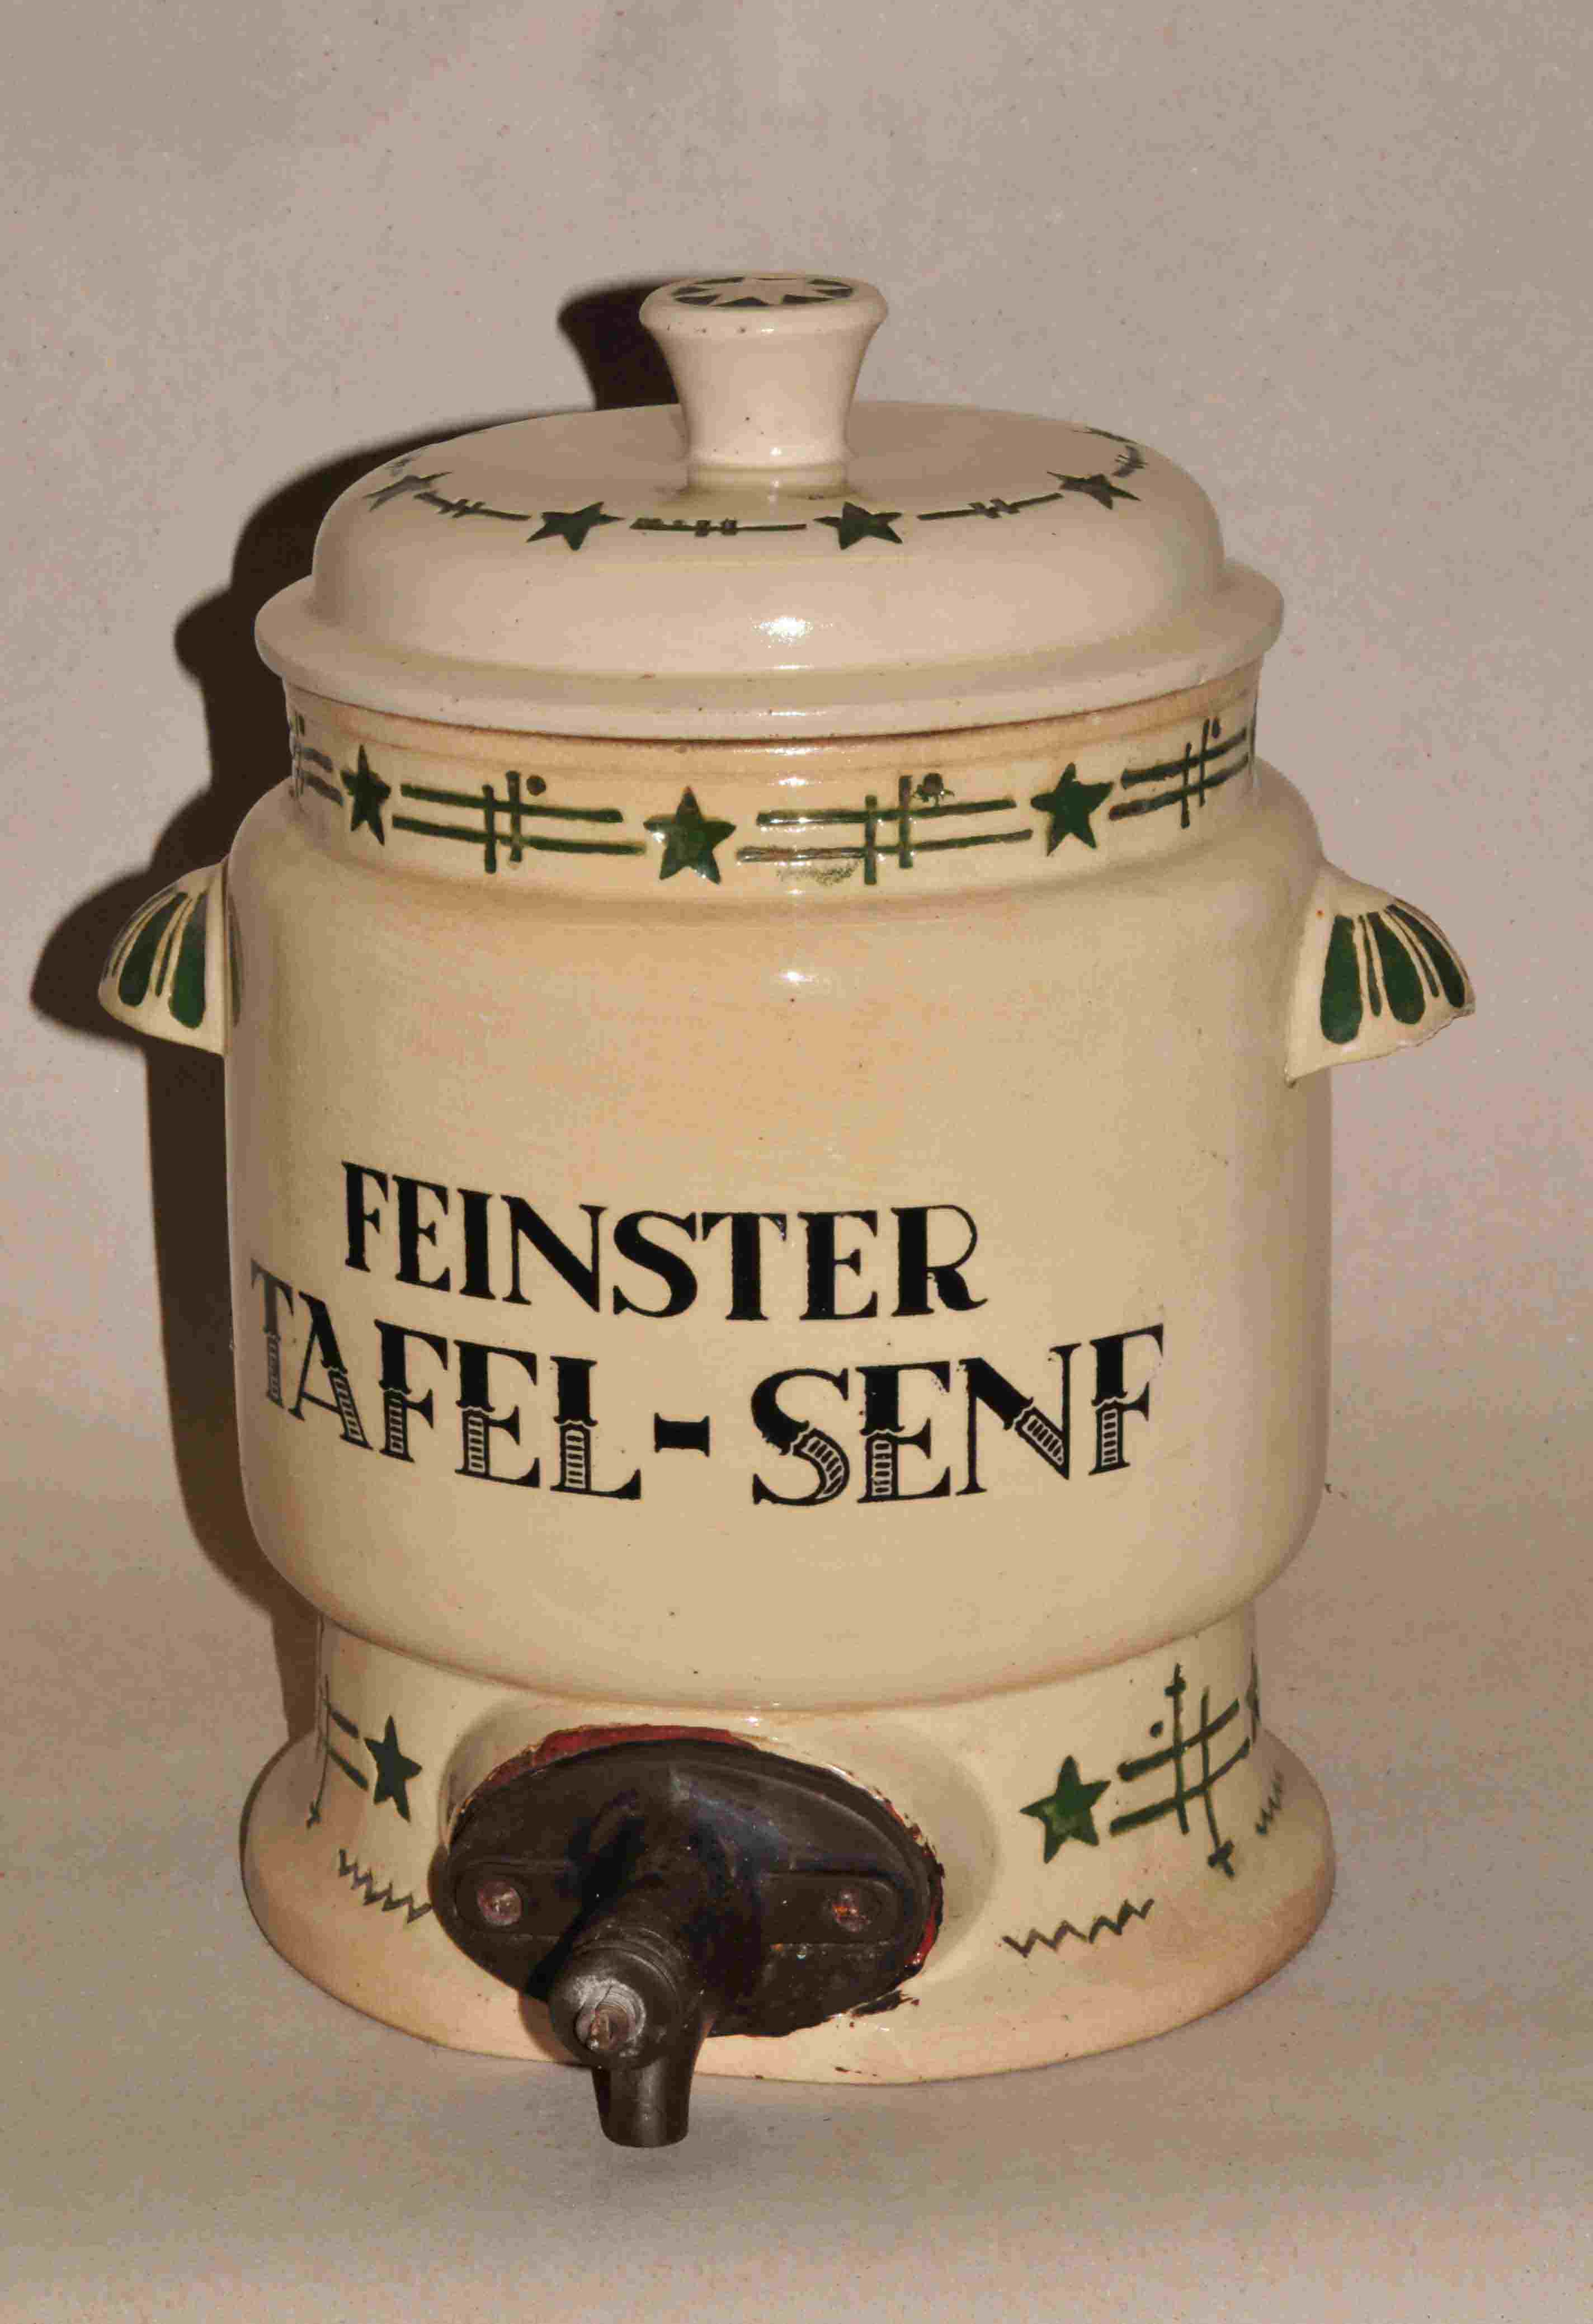 Feinster Tafel-Senf 